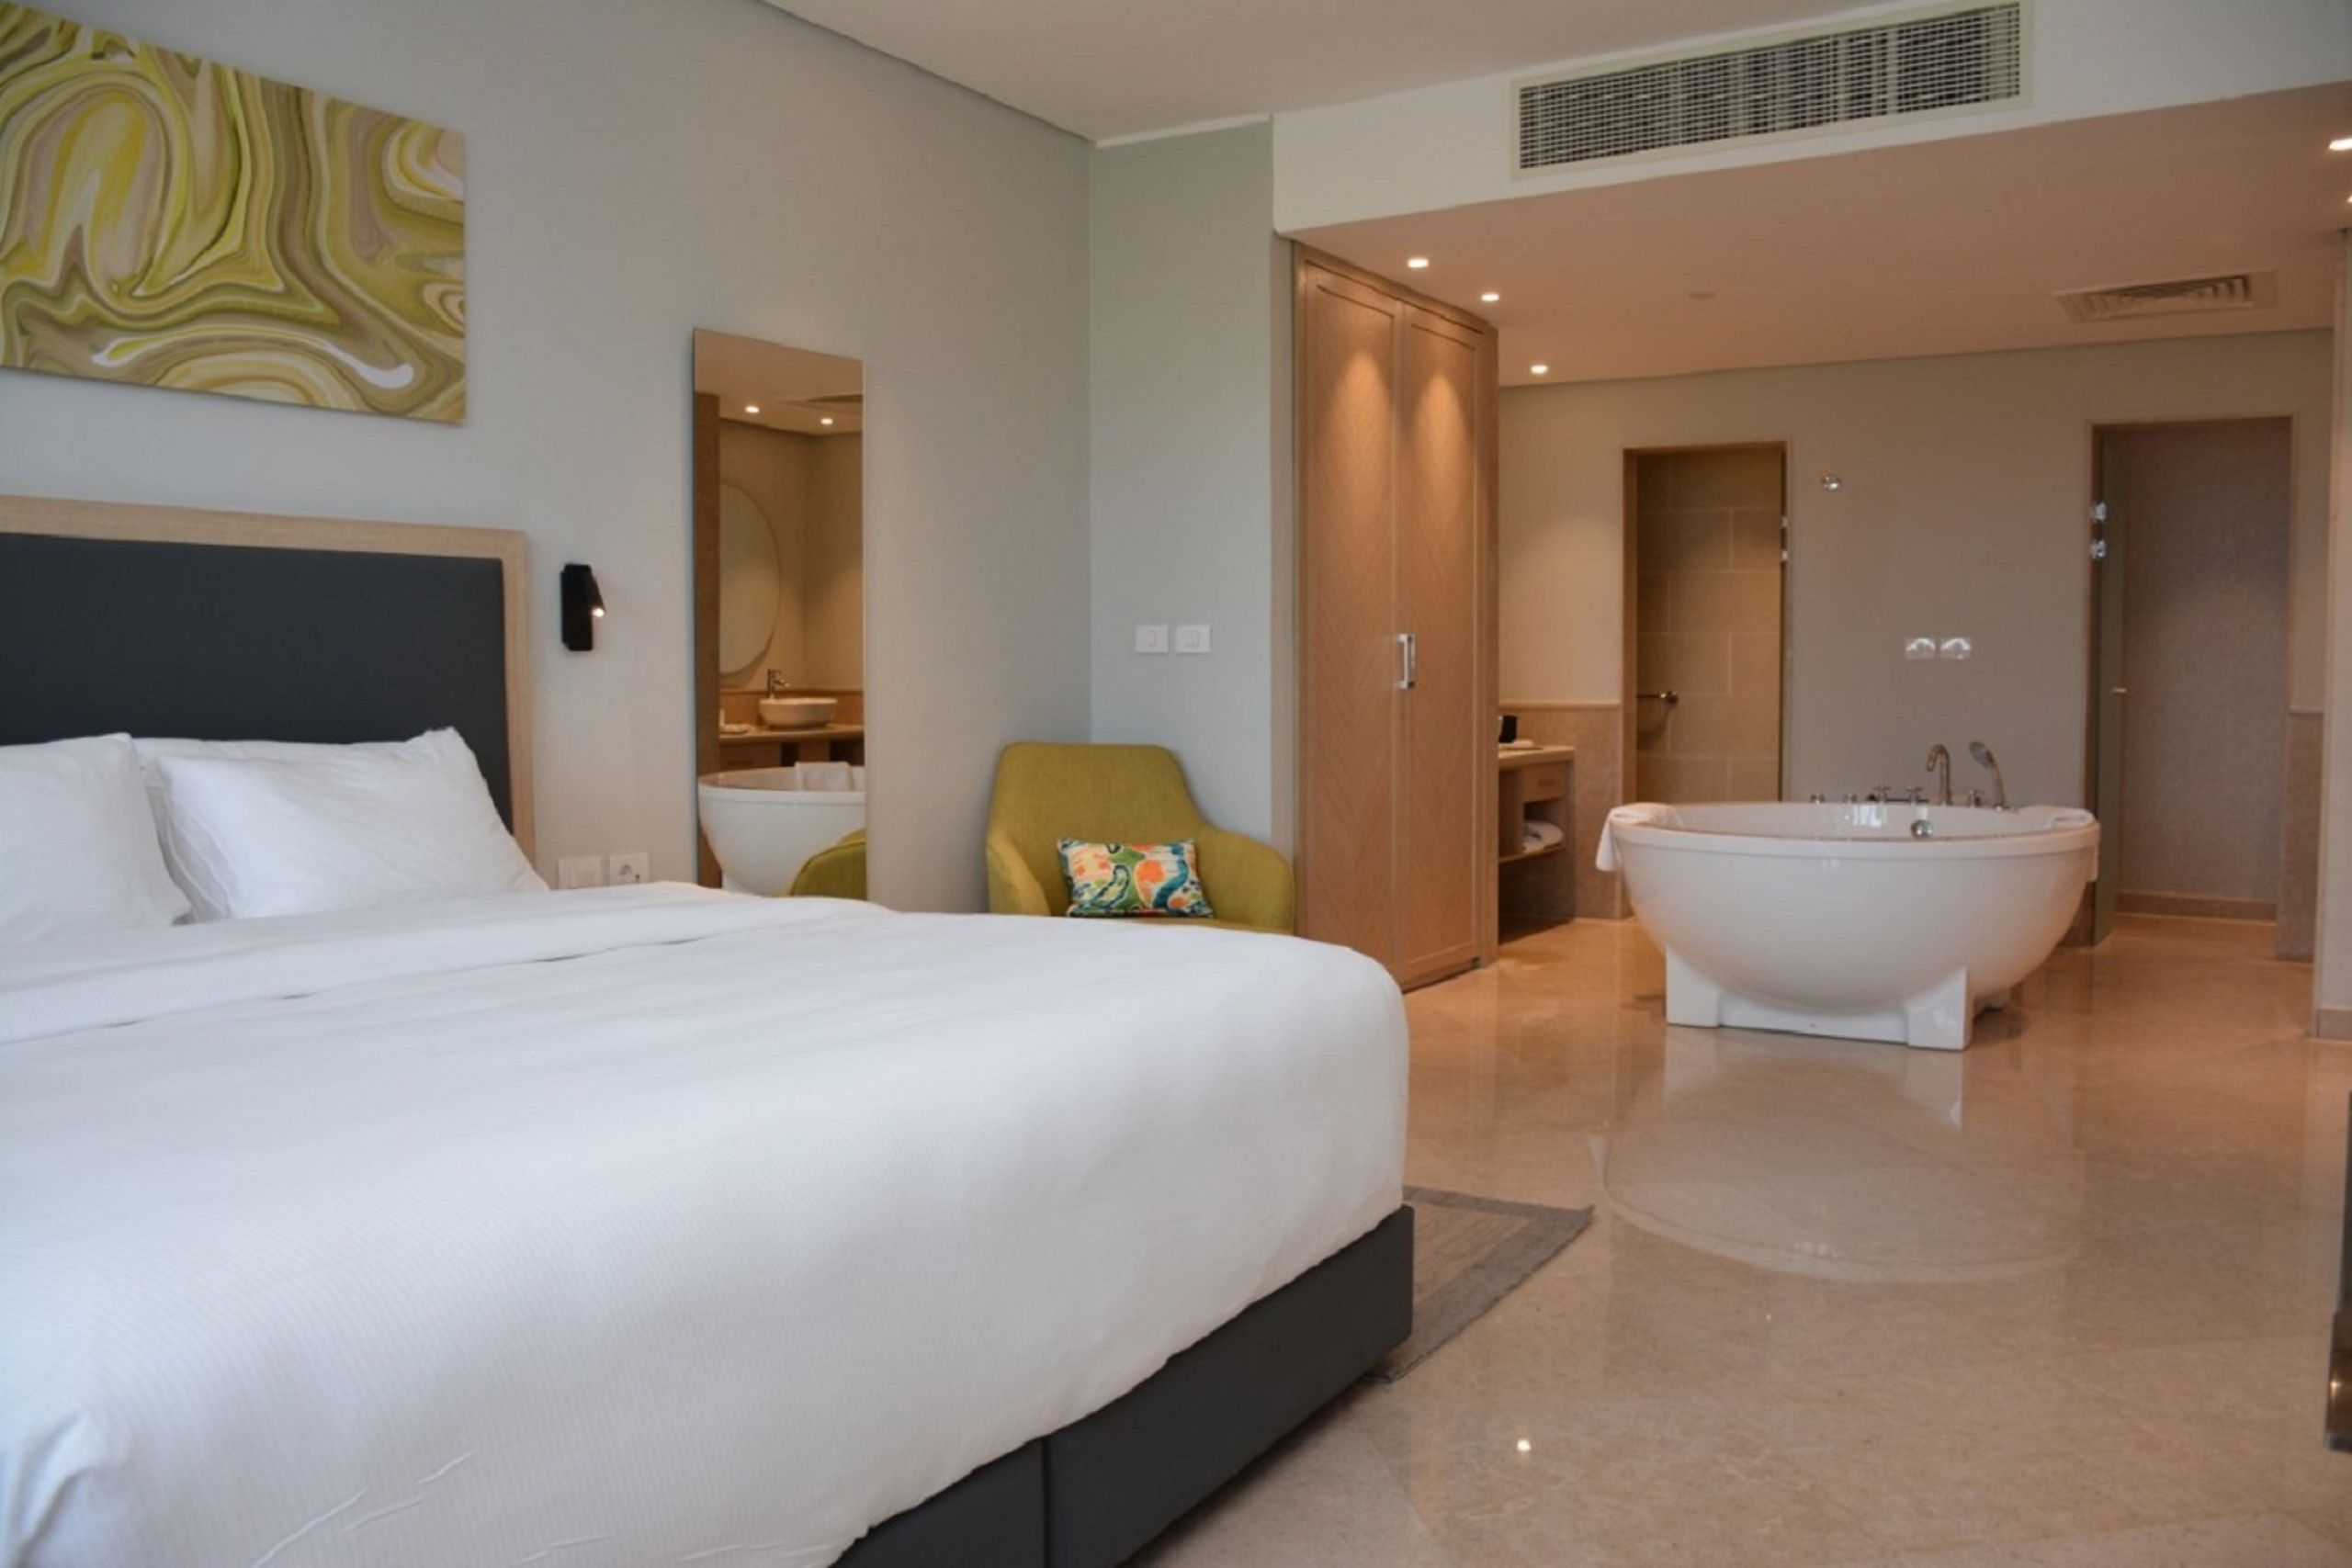 Steigenberger Aldau Beach Hotel, Hurghada, Egypt - The View Suite, bed- and bathroom